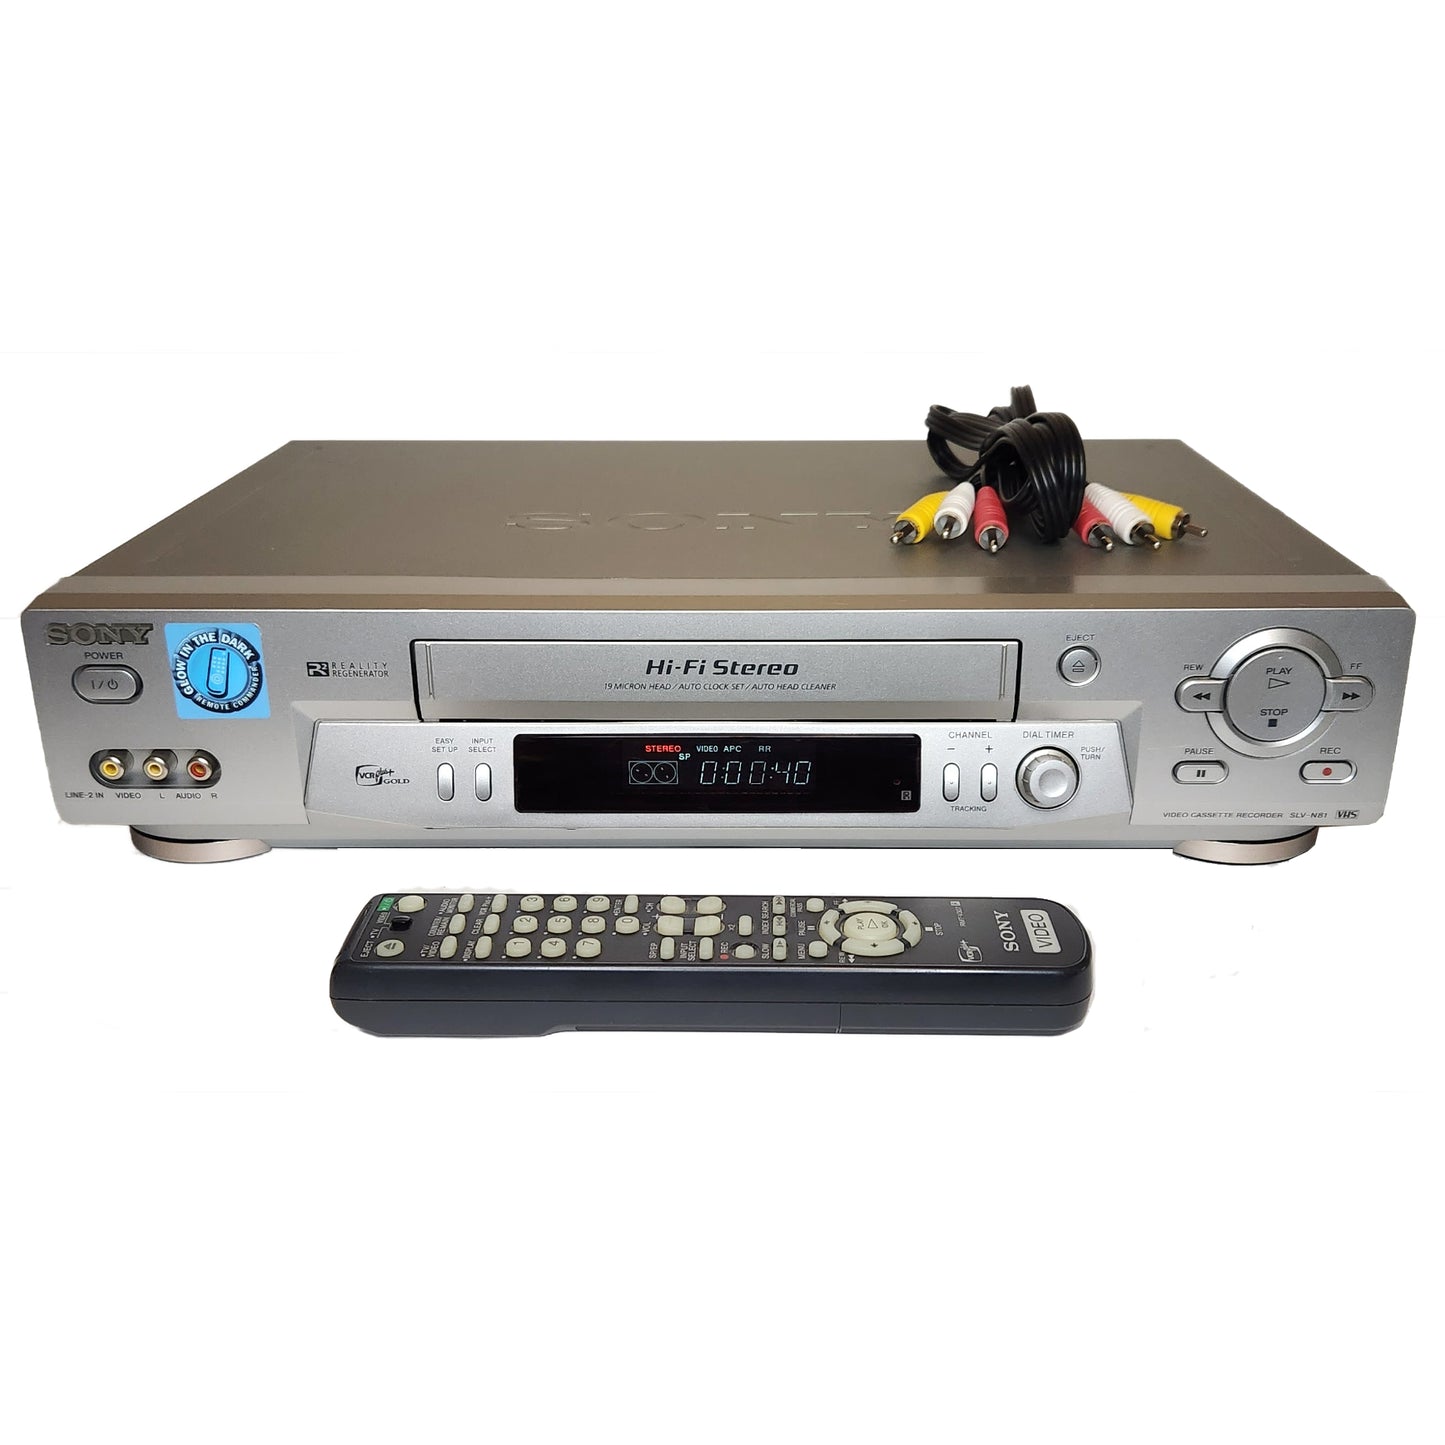 Sony SLV-N81 VCR, 4-Head Hi-Fi Stereo